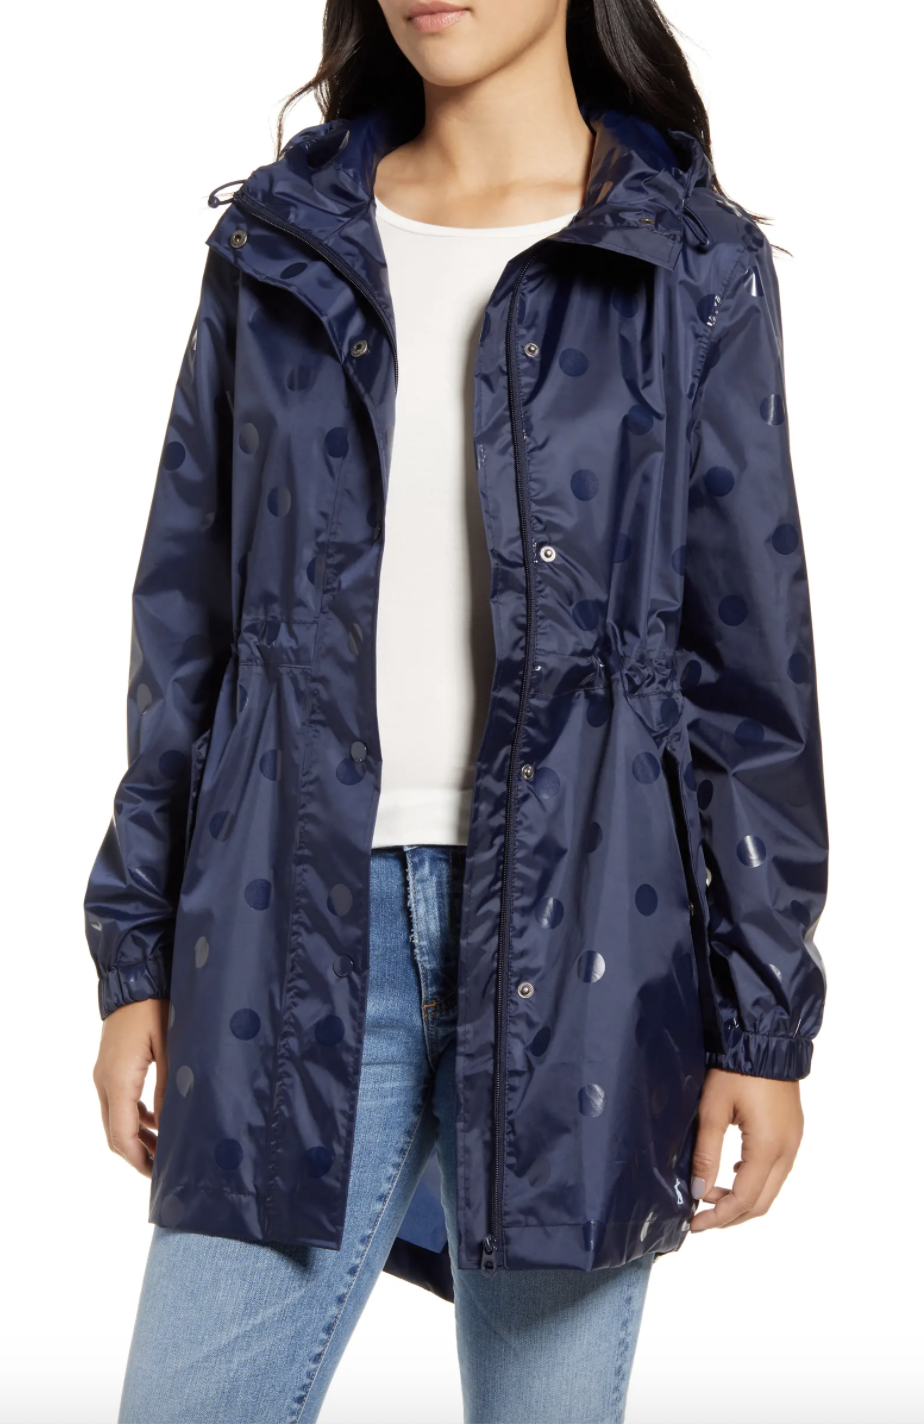 cute rain jackets to shop